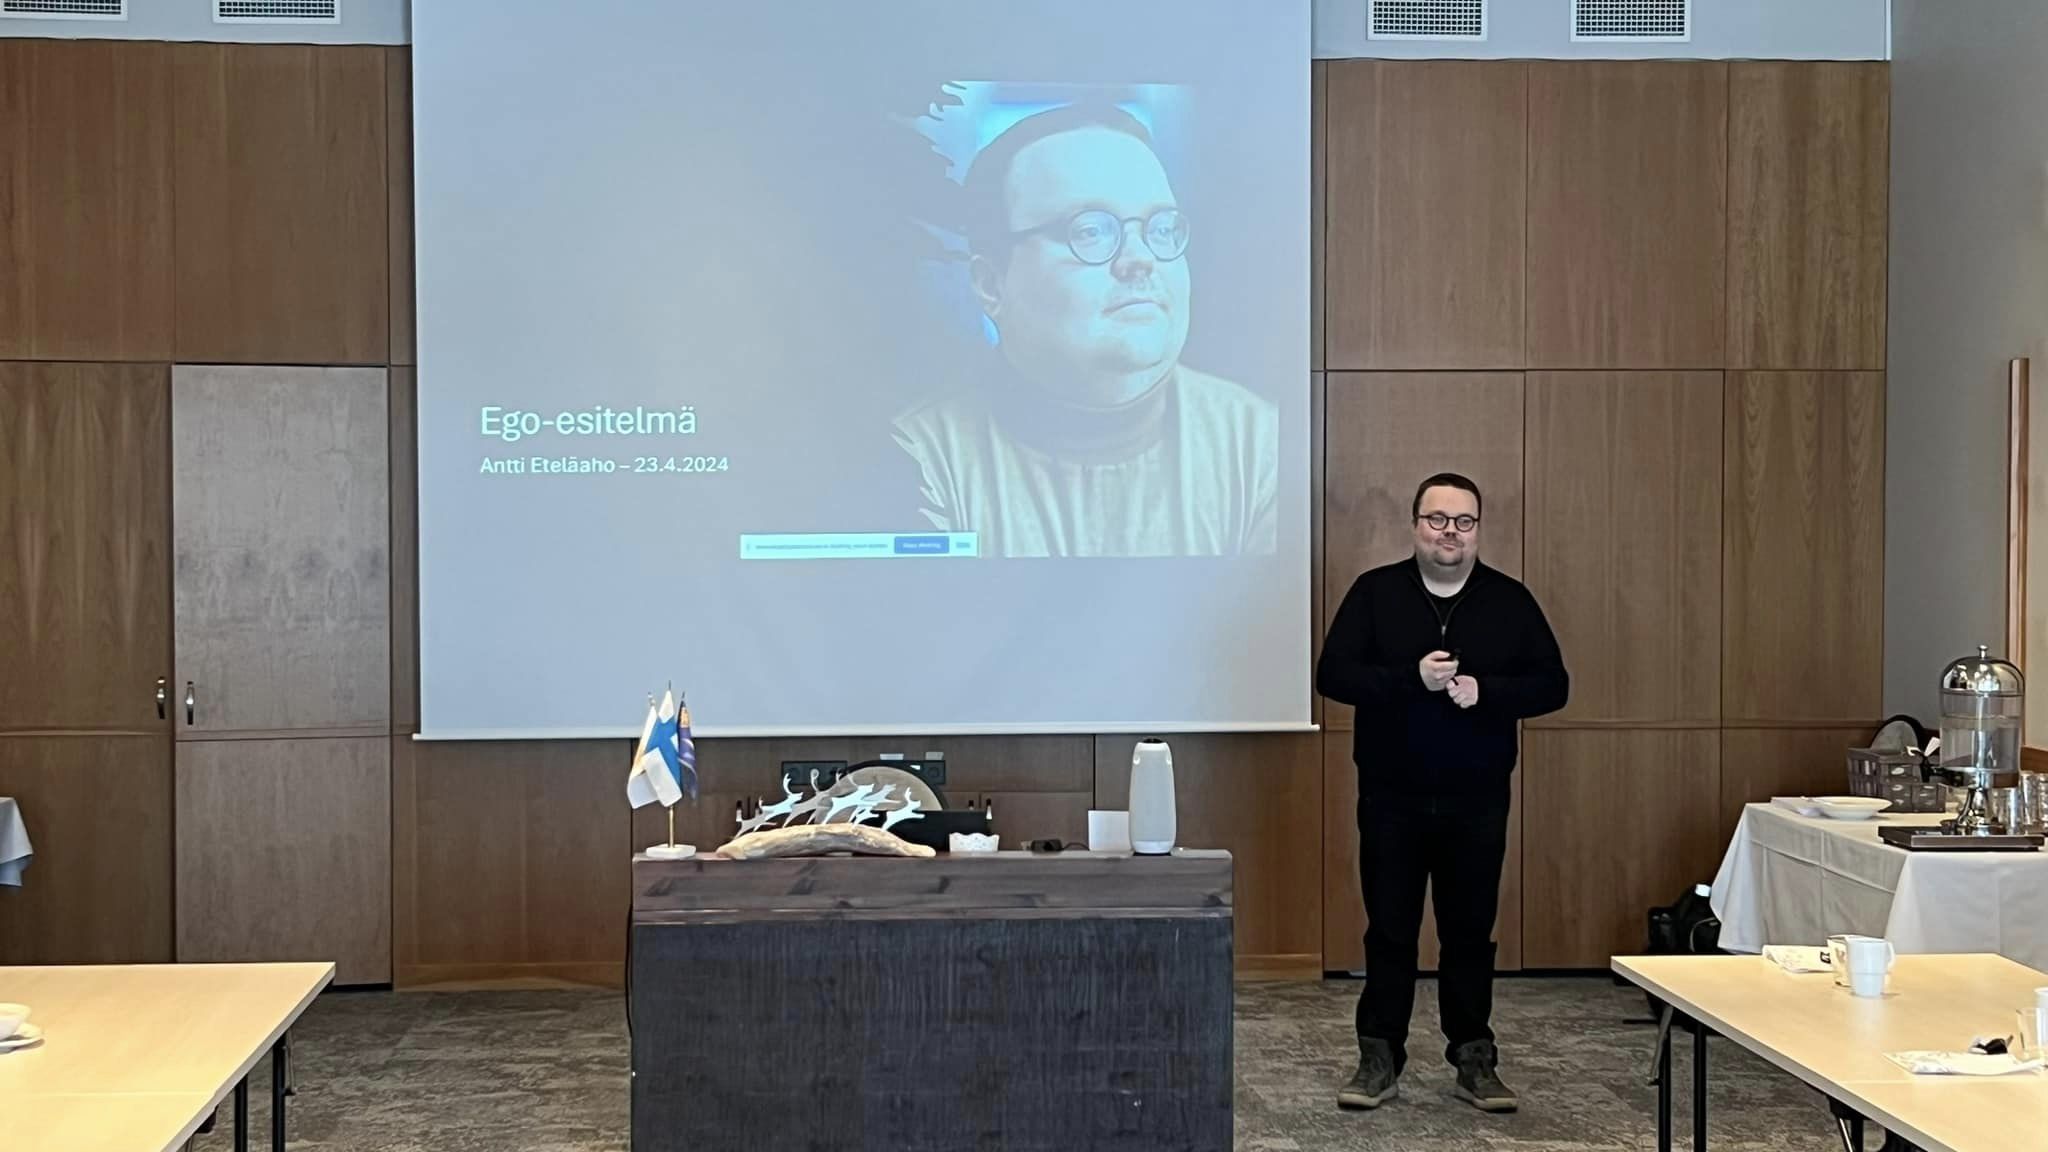 Antti Eteläaho´s ego presentation